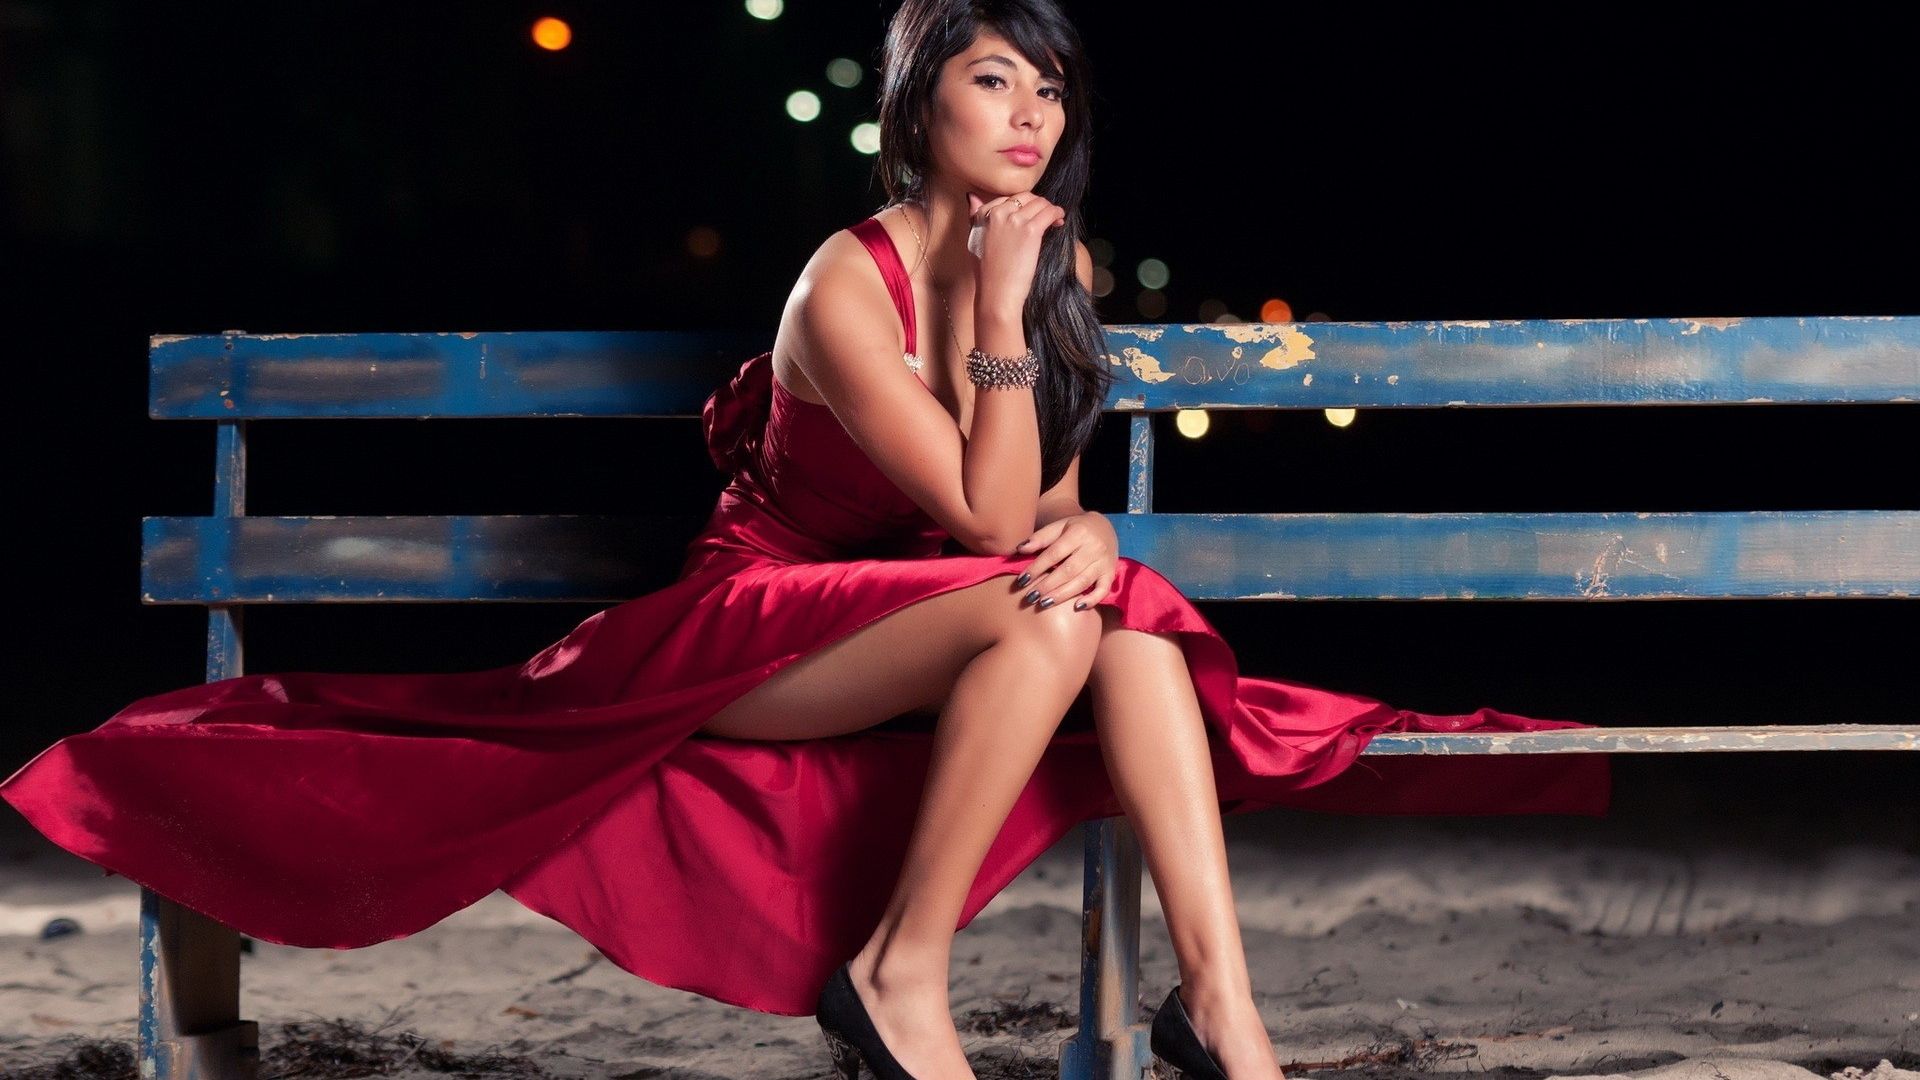 Free download women bench satin high heels Asians red dress models [1920x1200] for your Desktop, Mobile & Tablet. Explore Women in Heels Wallpaper. Asian Legs Wallpaper, High Heels Wallpaper